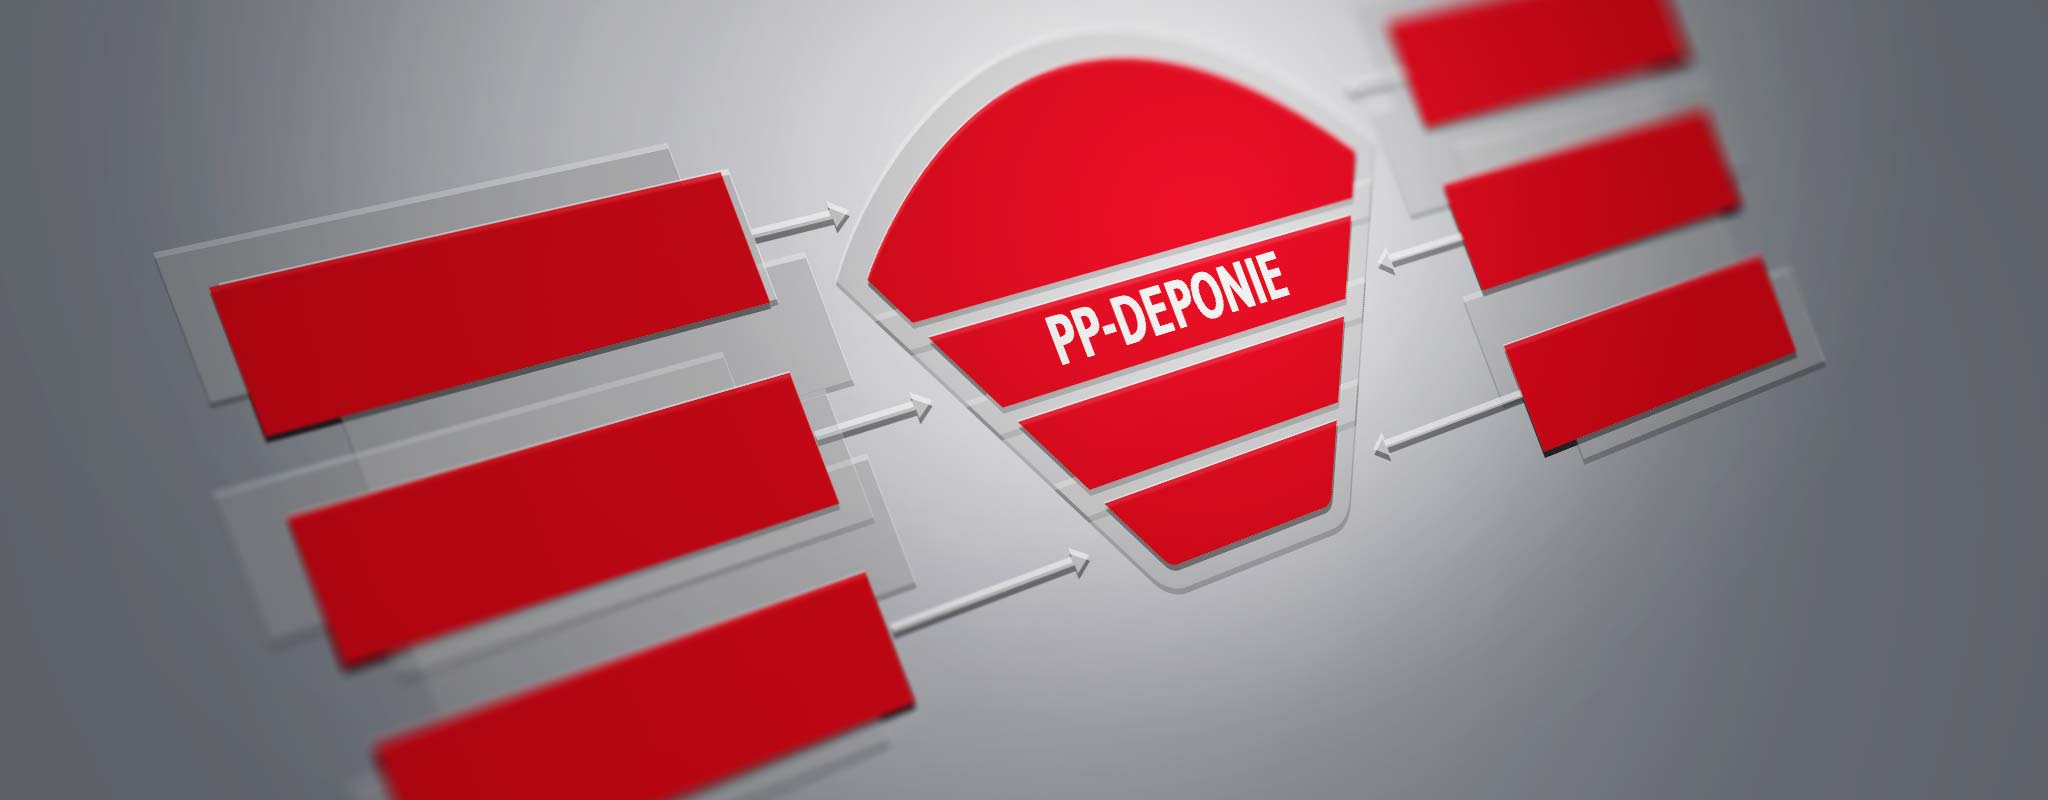 Alternativer Name für PP-DEPONIE: PrePaid Deponie